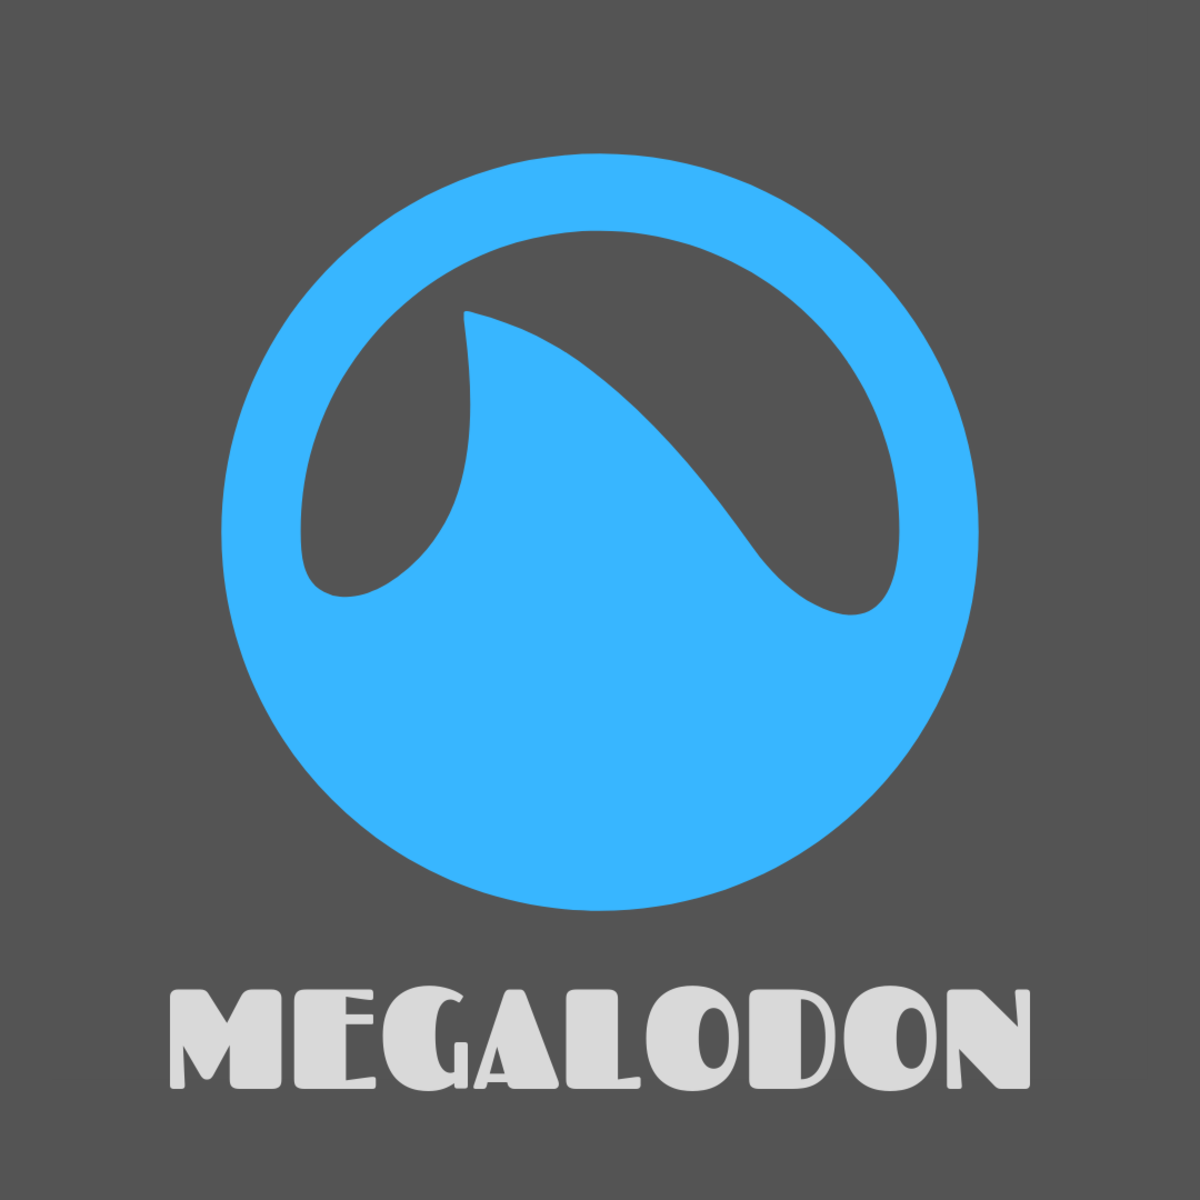 Fear the mighty hero, Megalodon!